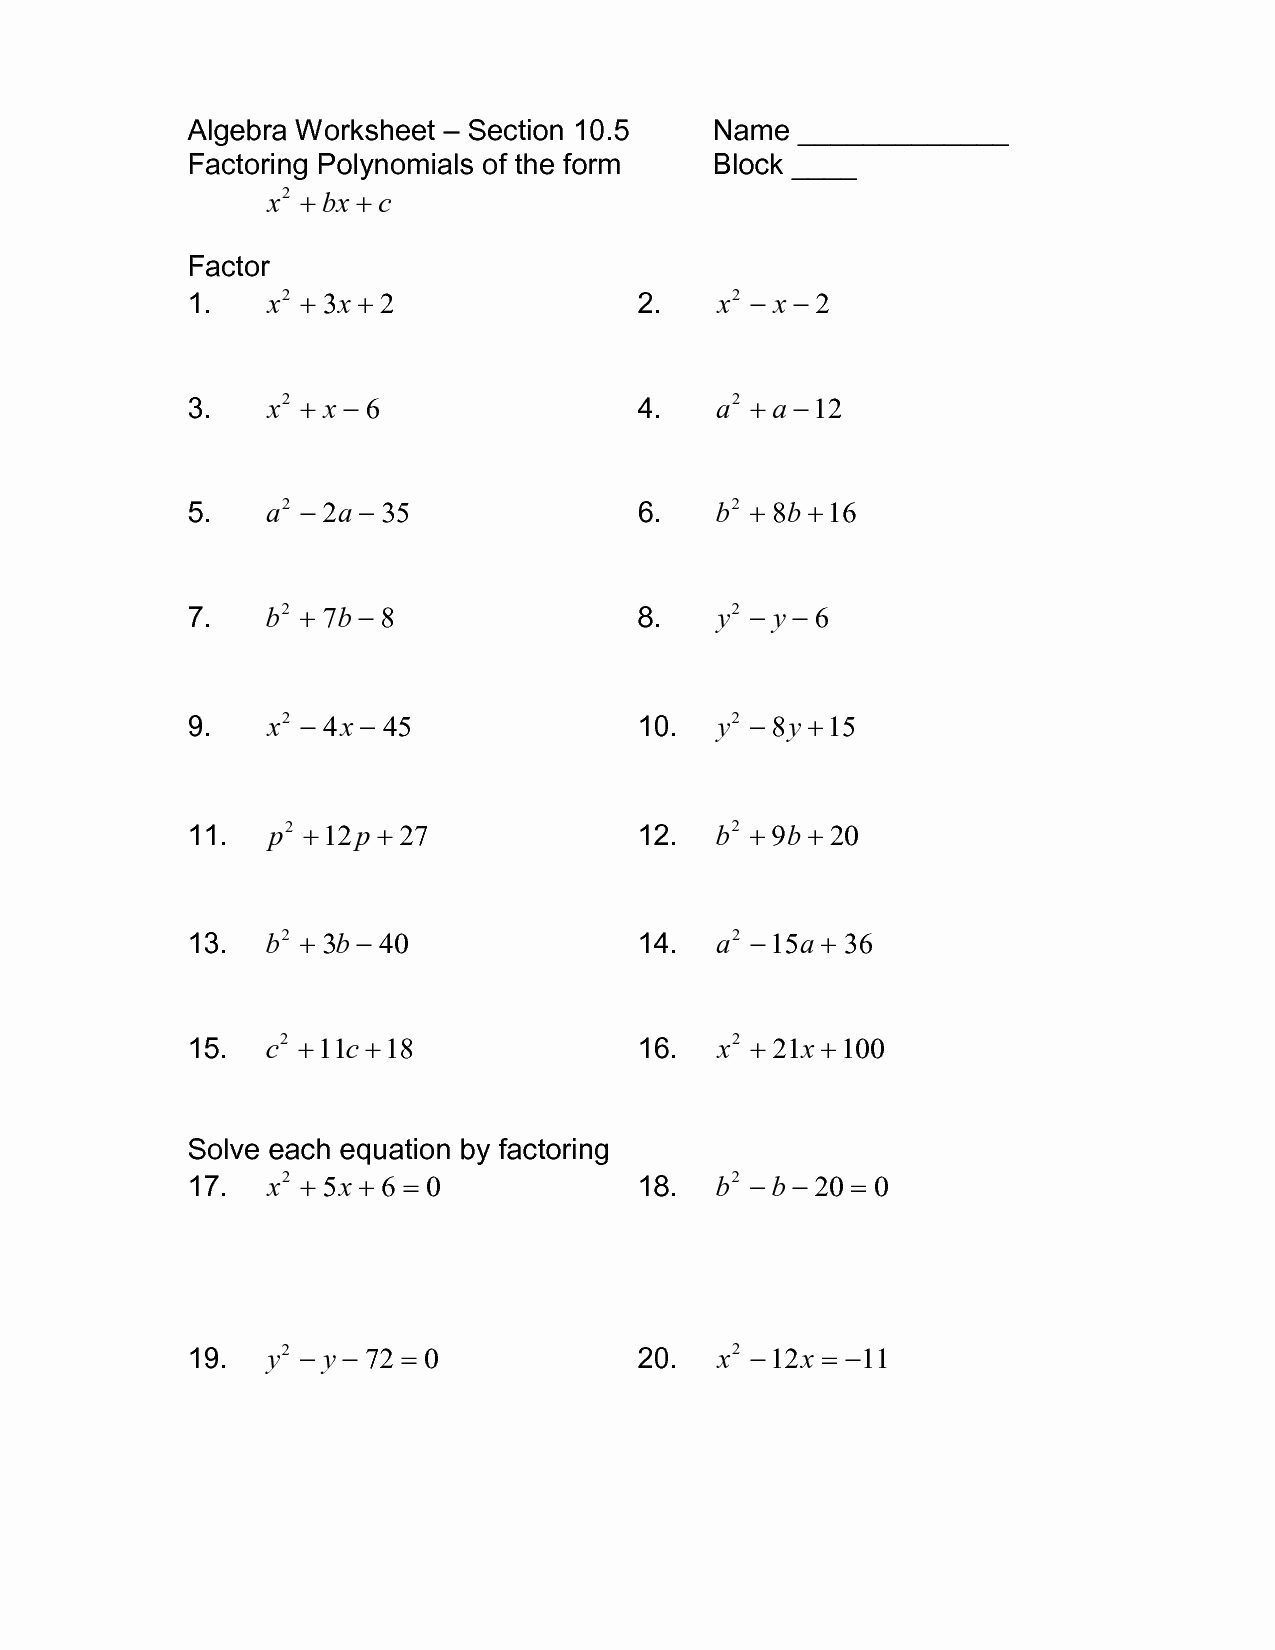 Factoring Trinomials Worksheet Algebra 2 Lovely 14 Best Of Kuta software Factoring Trinomials